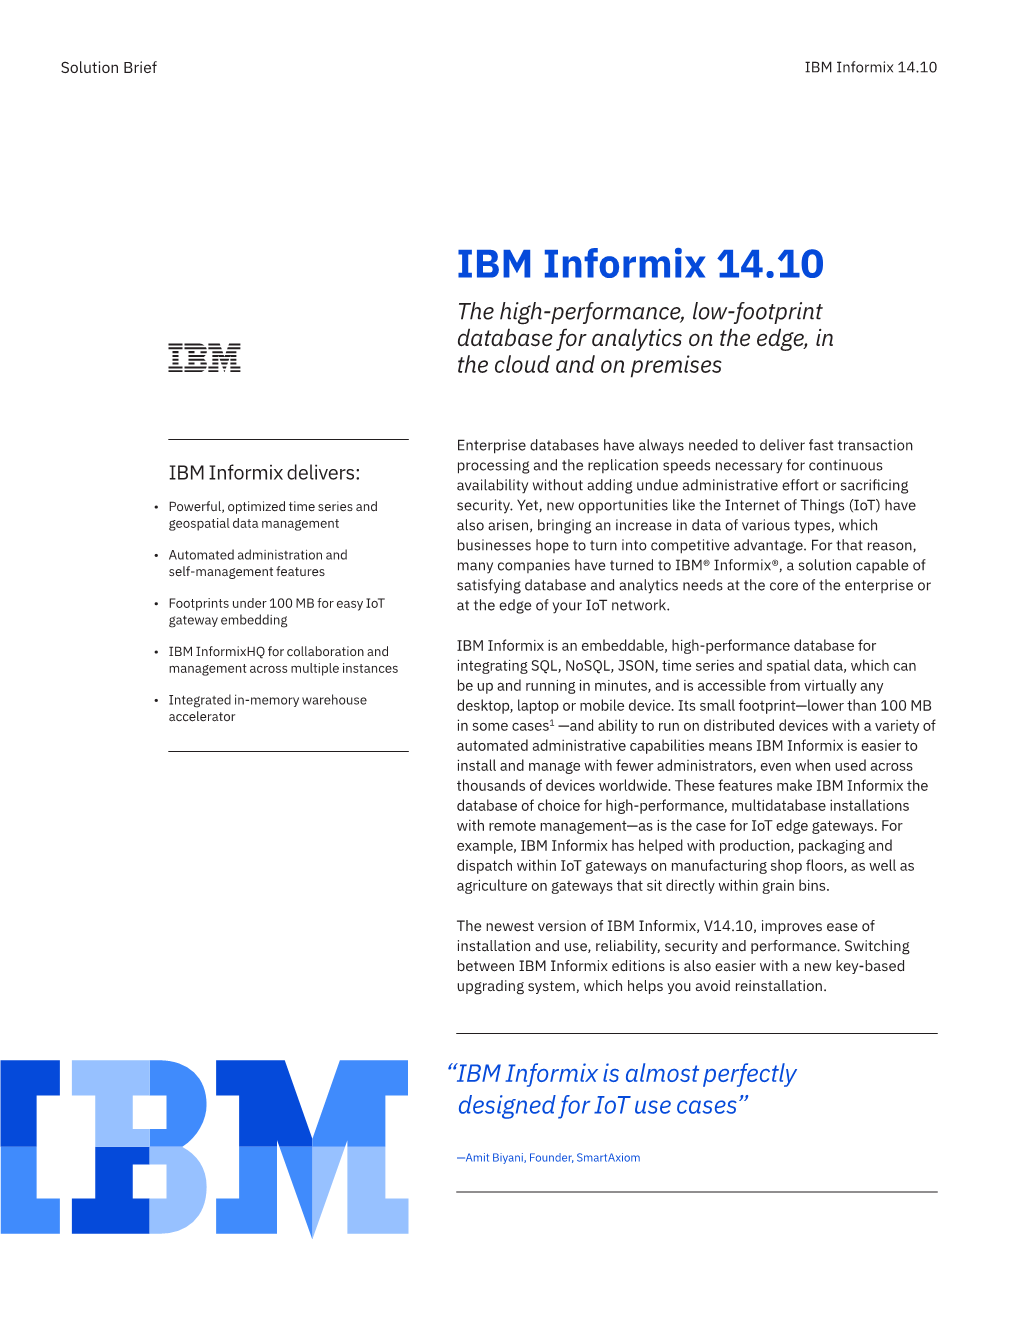 IBM Informix 14.10: the High-Performance, Low-Footprint